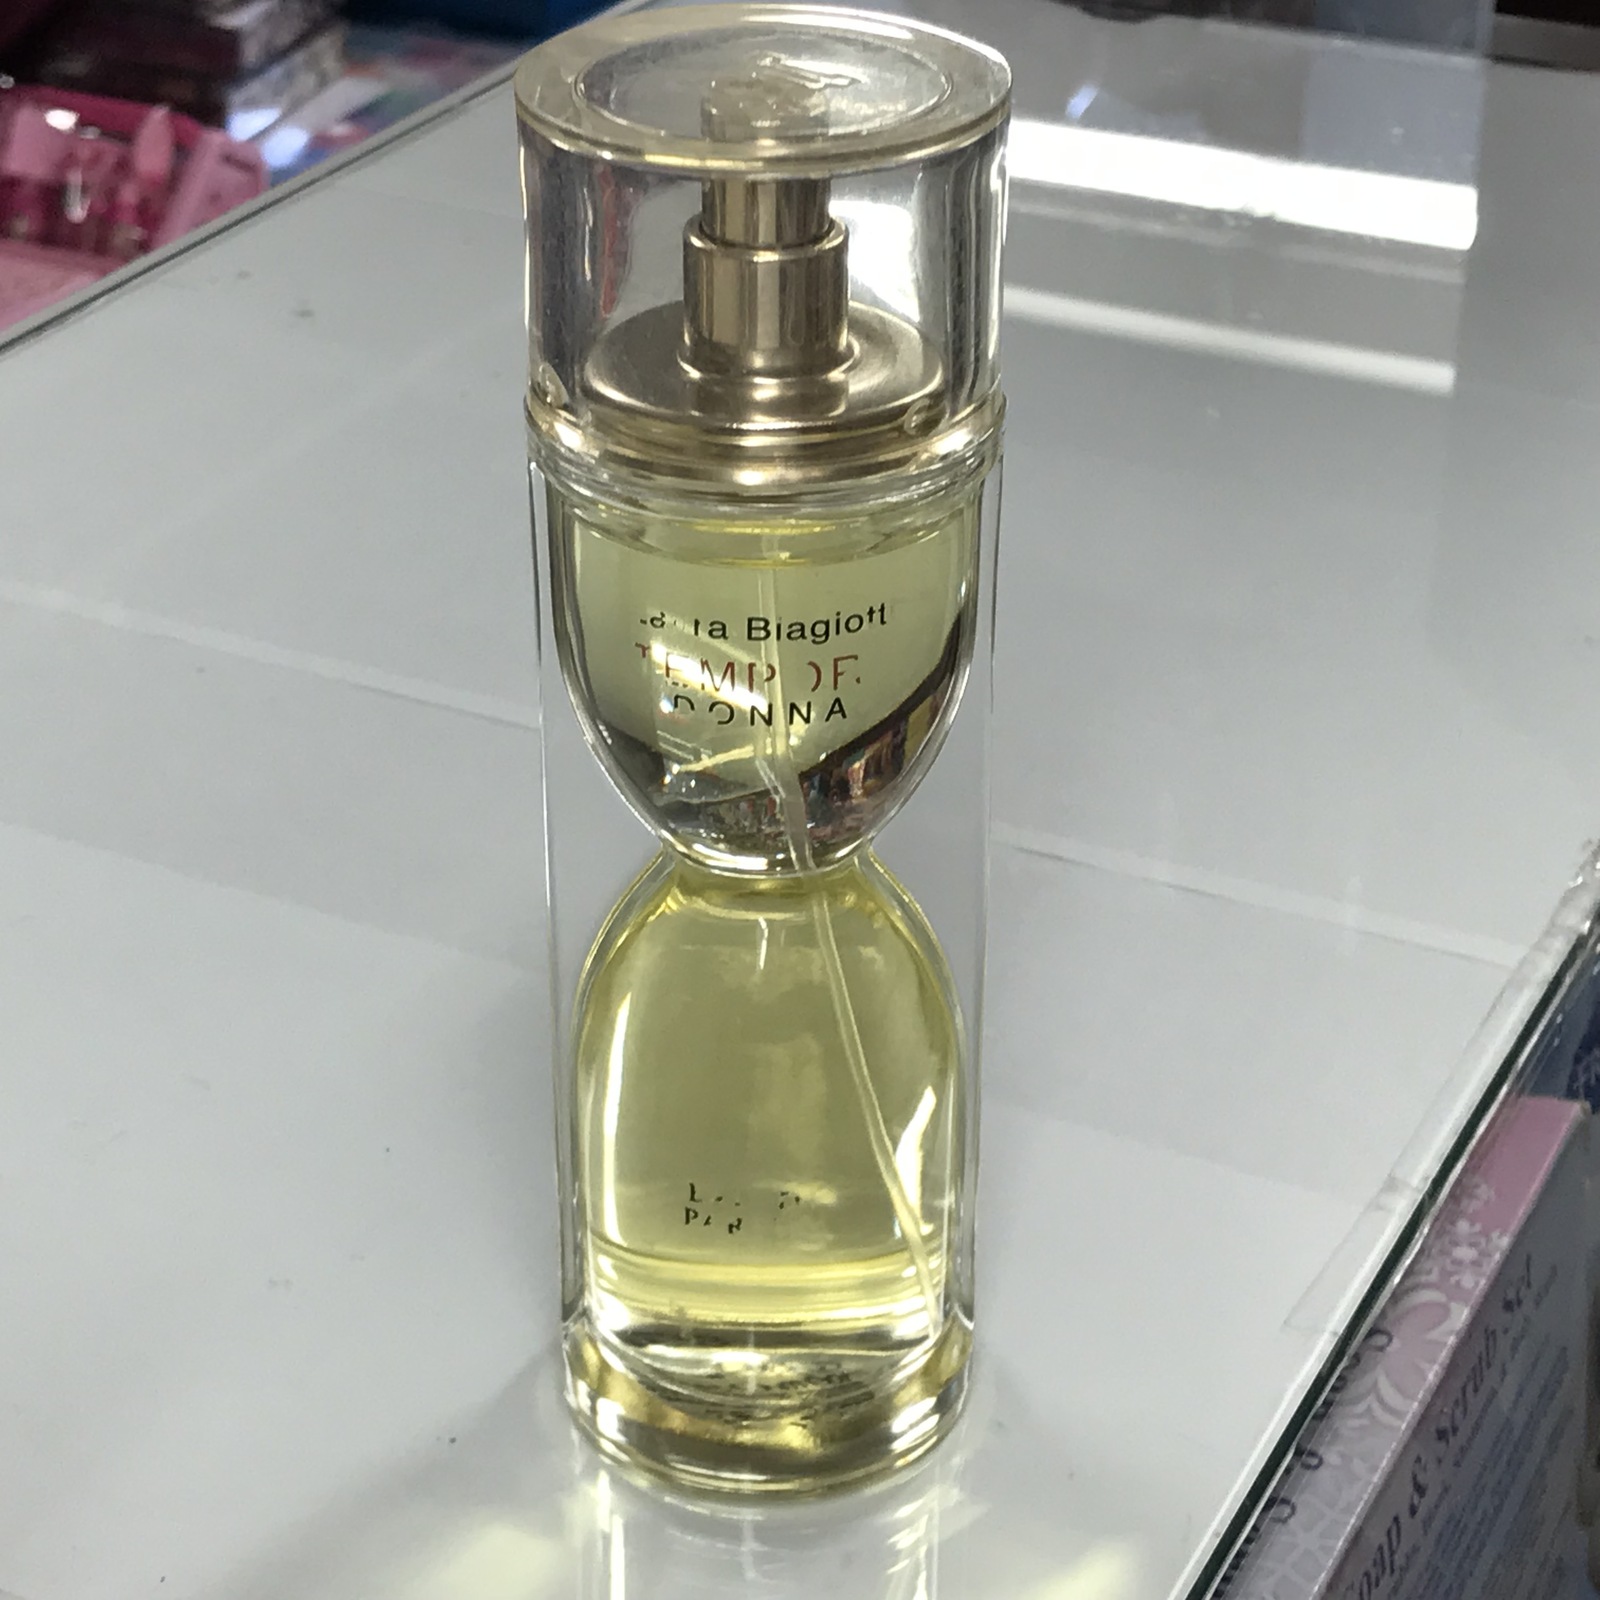 Tempore Donna by Laura Biagiotti for Women 3.4 fl.oz / 100 ml eau de parfum spra - $98.98